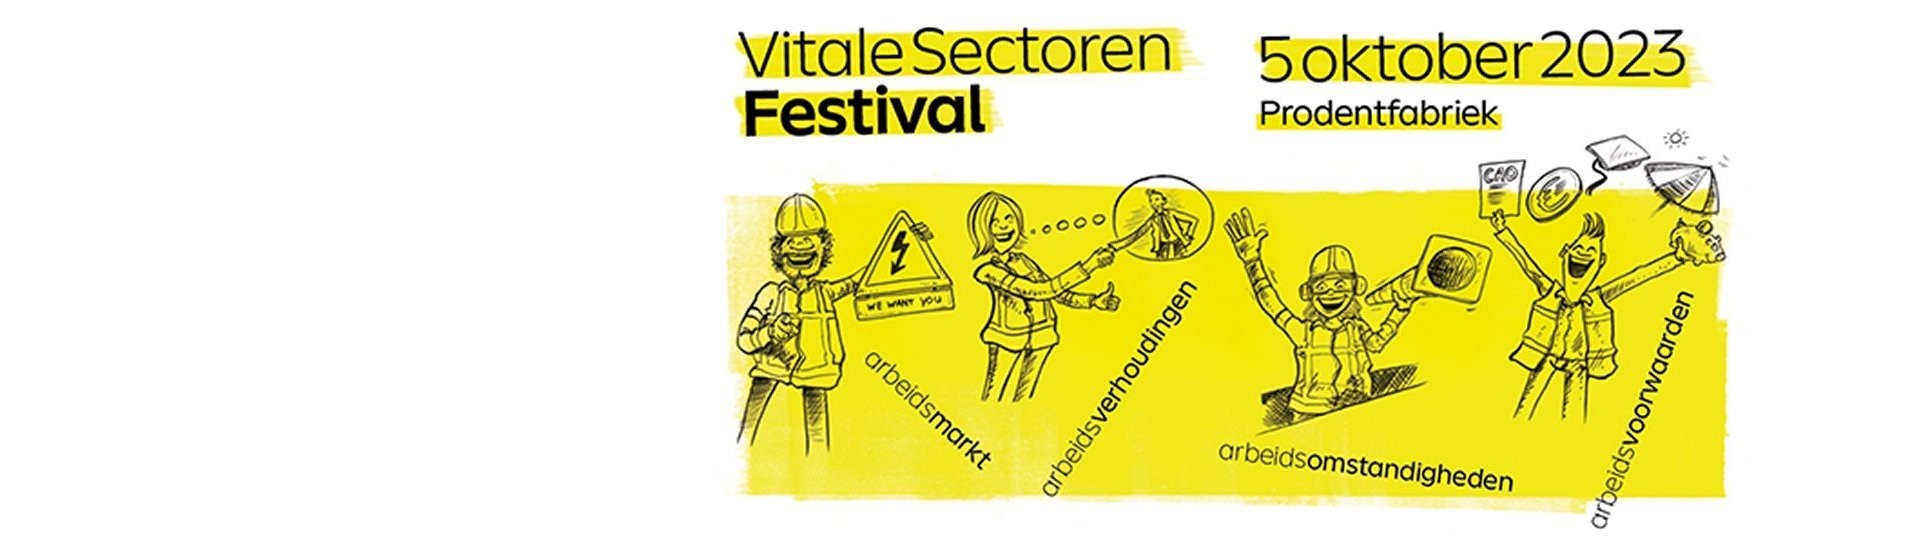 Vitale Sectoren Festival 2023 - 1912x544px